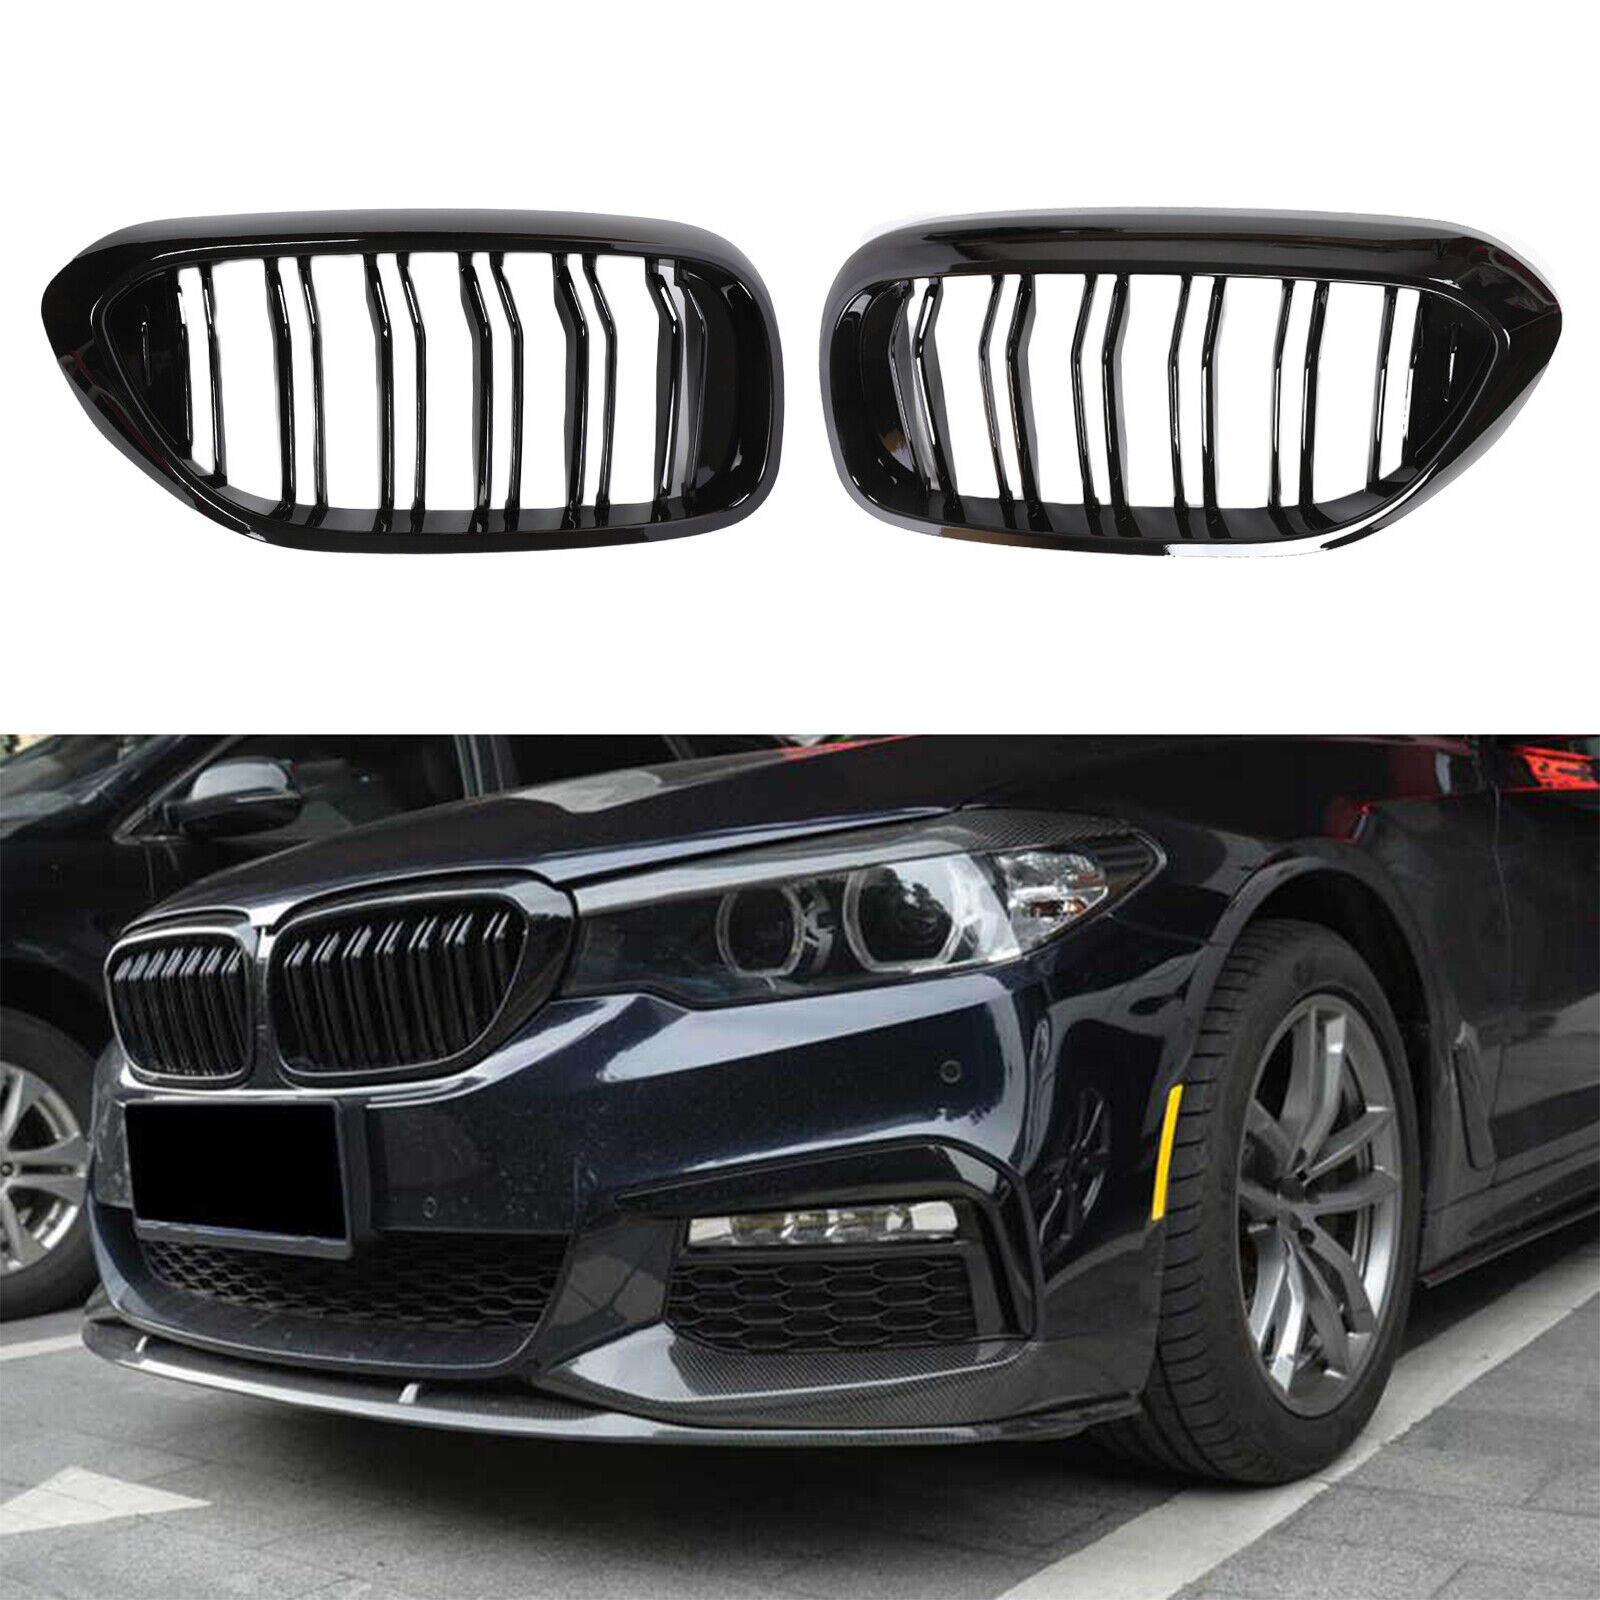 Shiny Black For BMW G30 G31 5-Series 530i 540i 2018 Front Kidney Grille